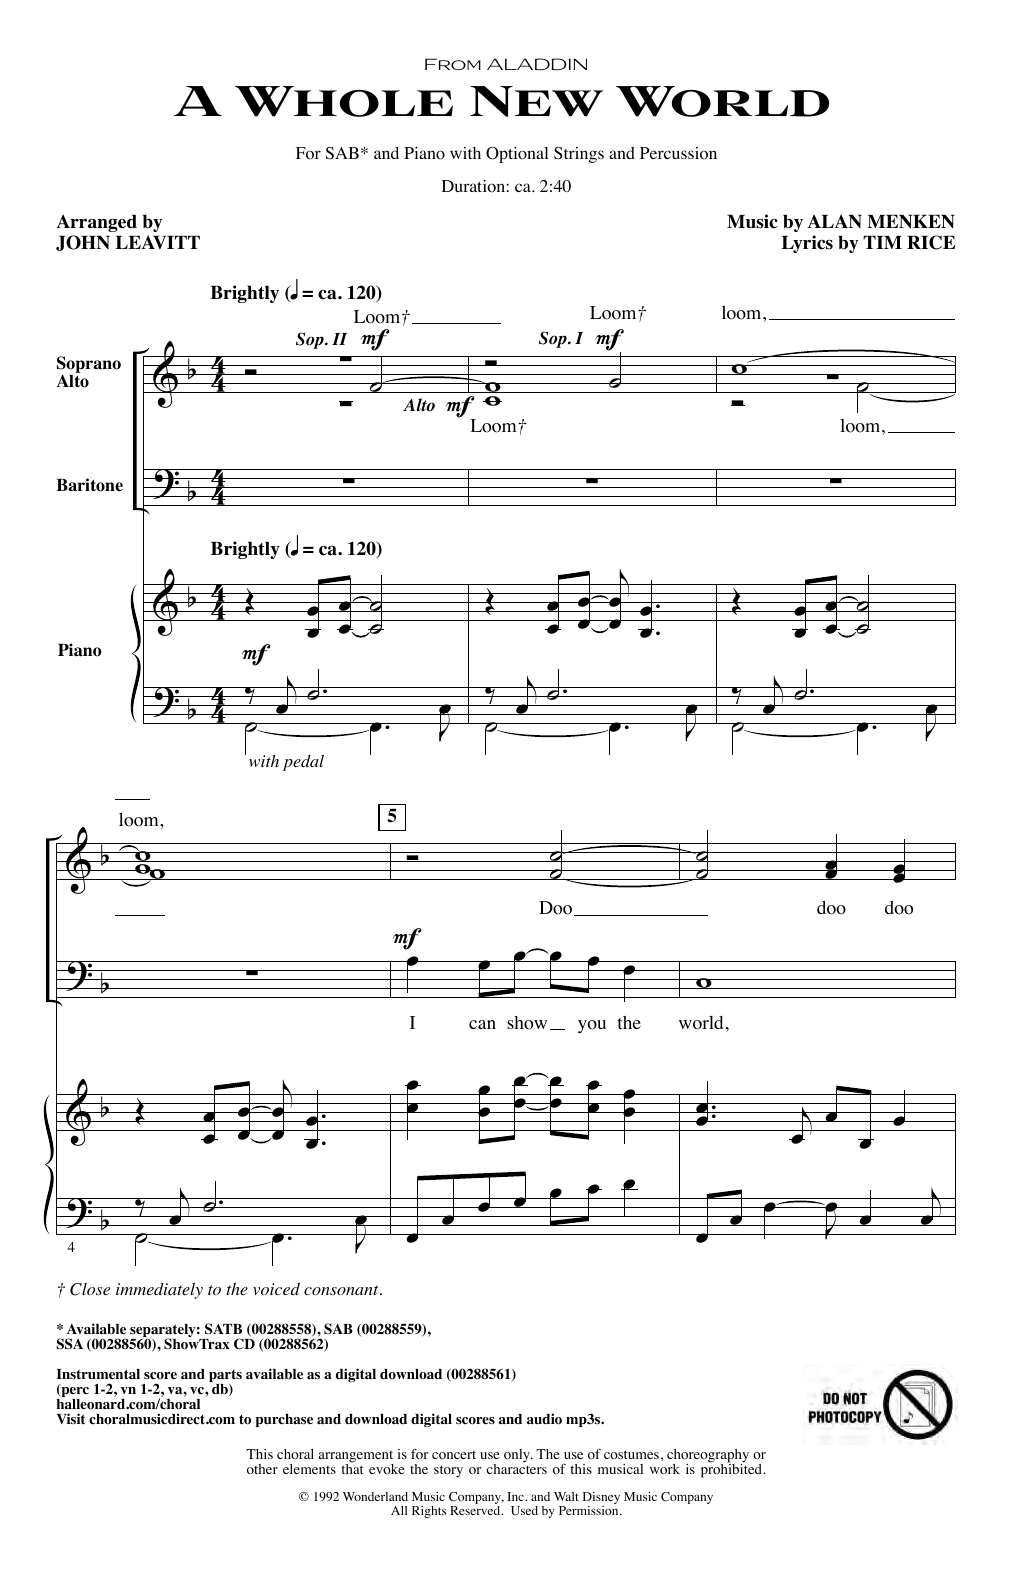 Alan Menken A Whole New World (from Aladdin) (arr. John Leavitt) Sheet Music Notes & Chords for SATB Choir - Download or Print PDF